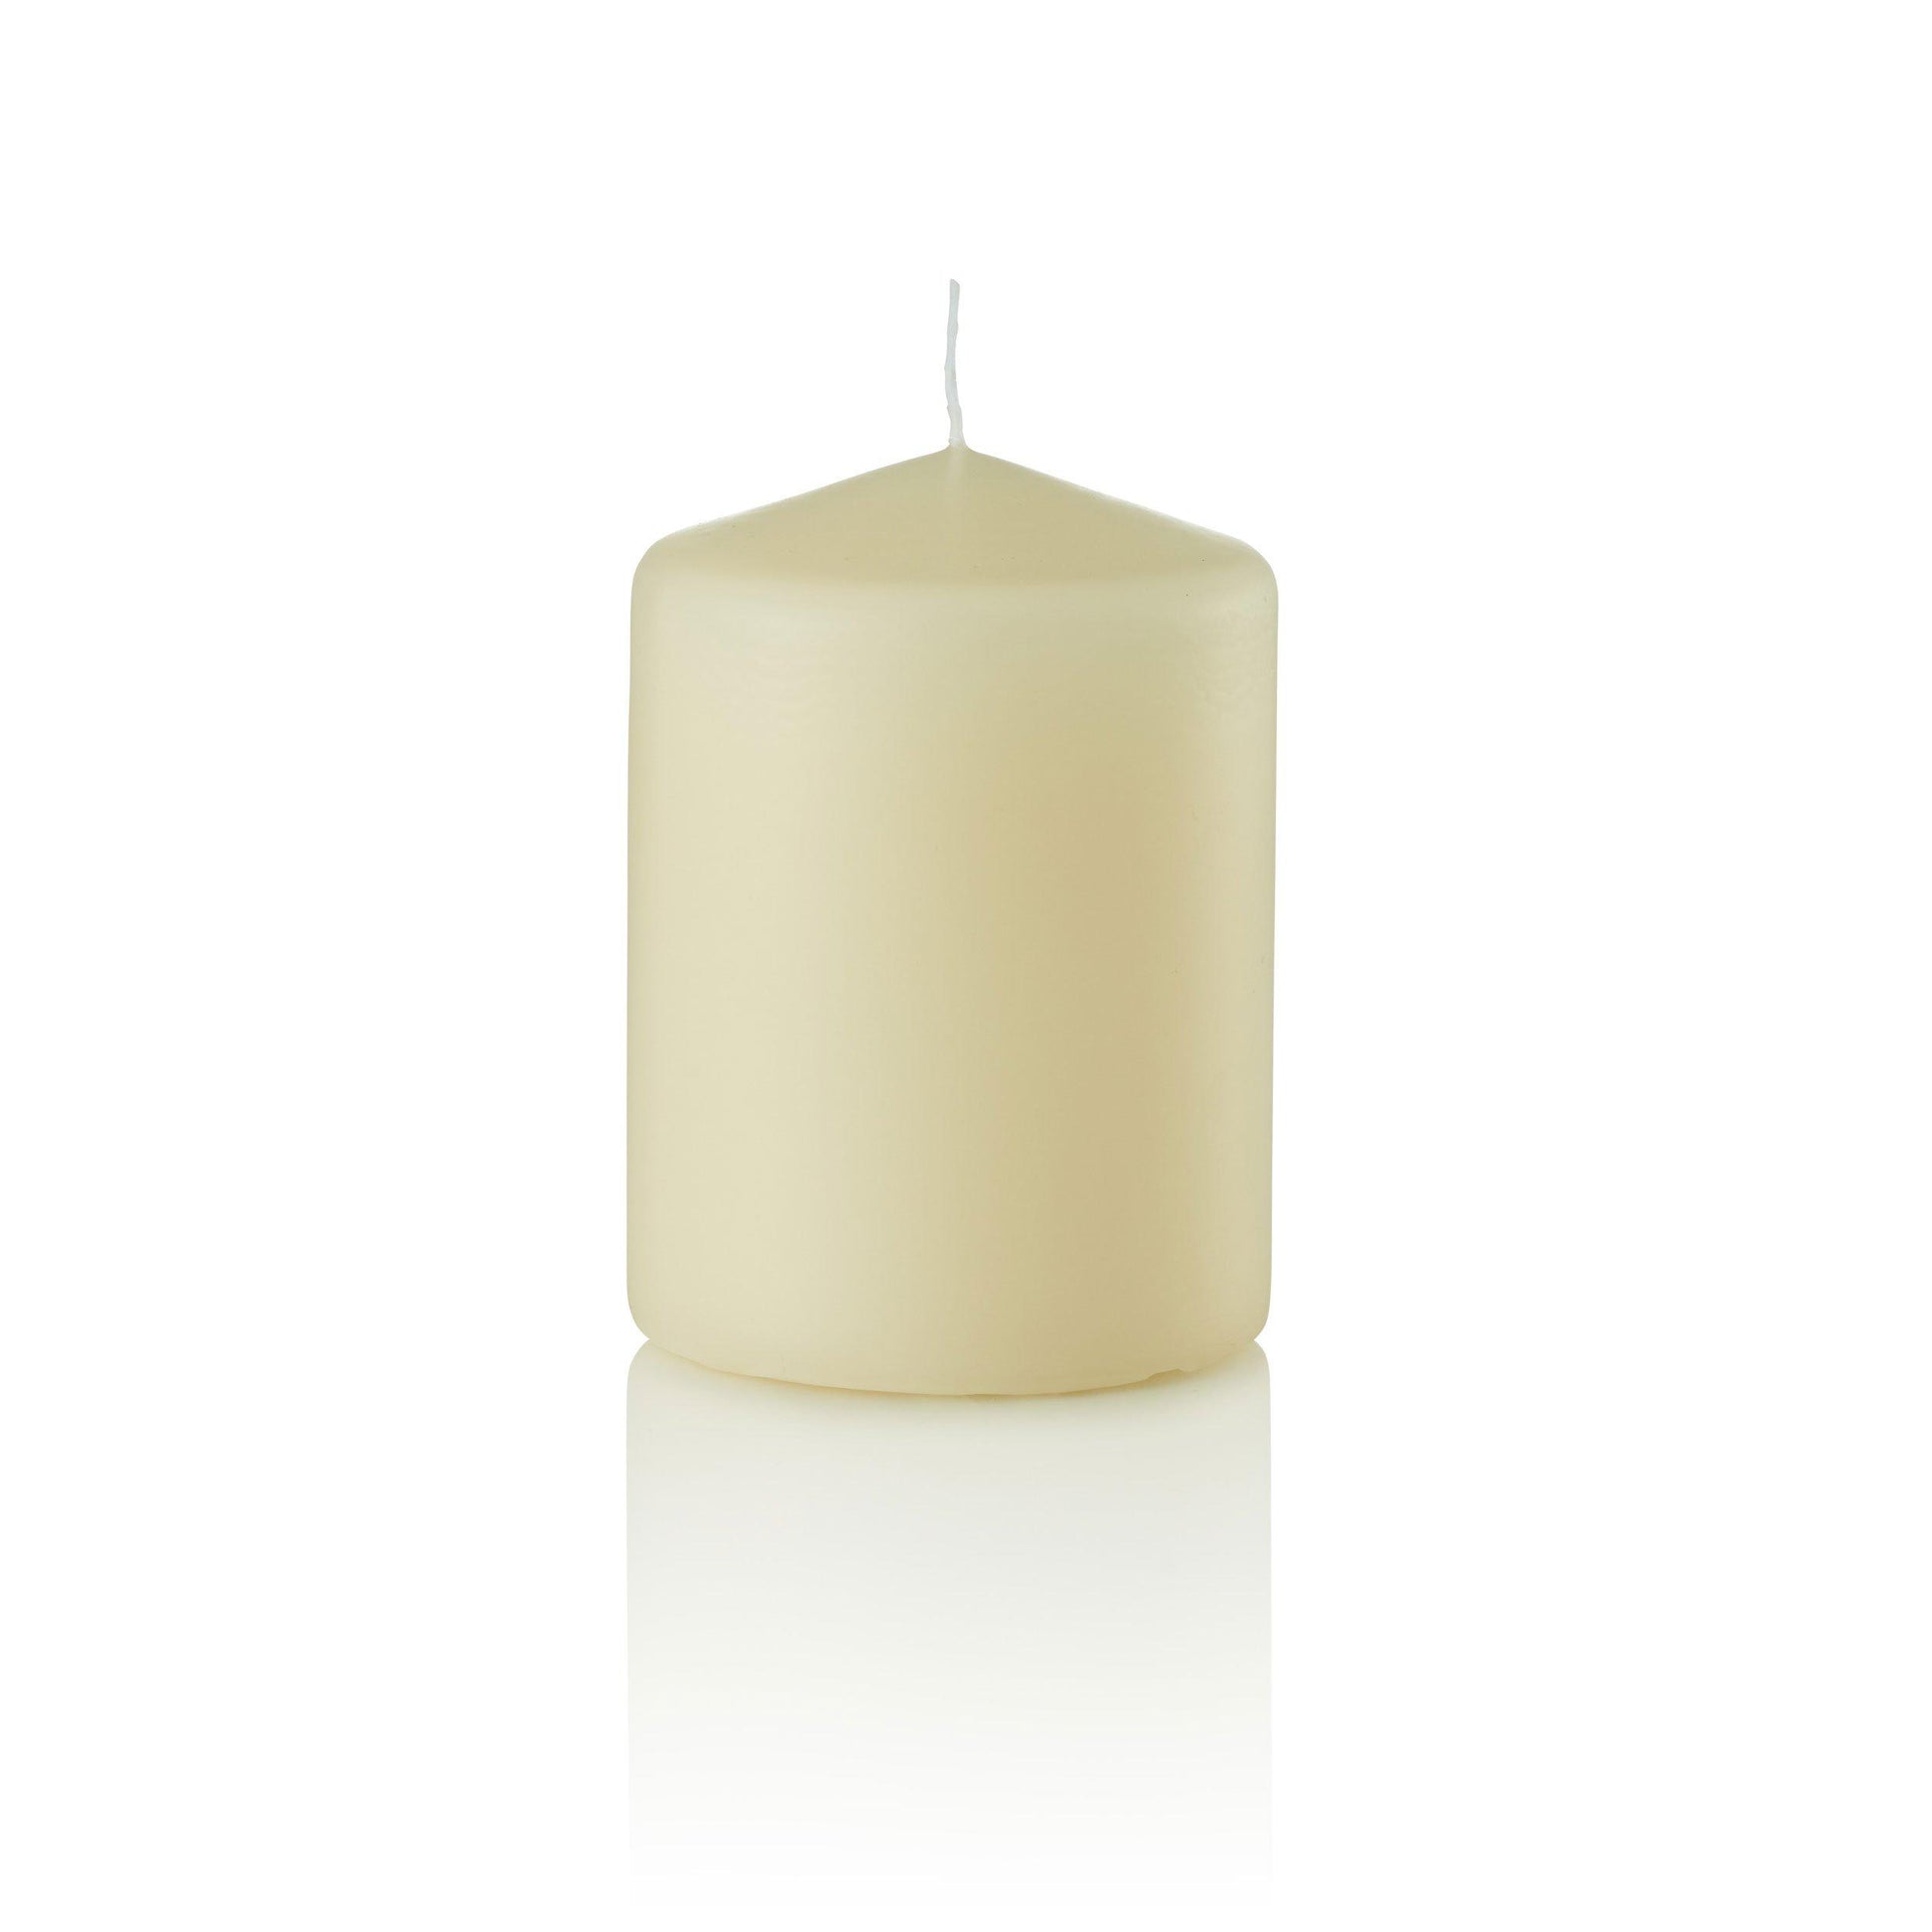 3 x 4 Pillar Candles, Vanilla, Unscented, Set of 12-pillar candles-TableTopLighting.com